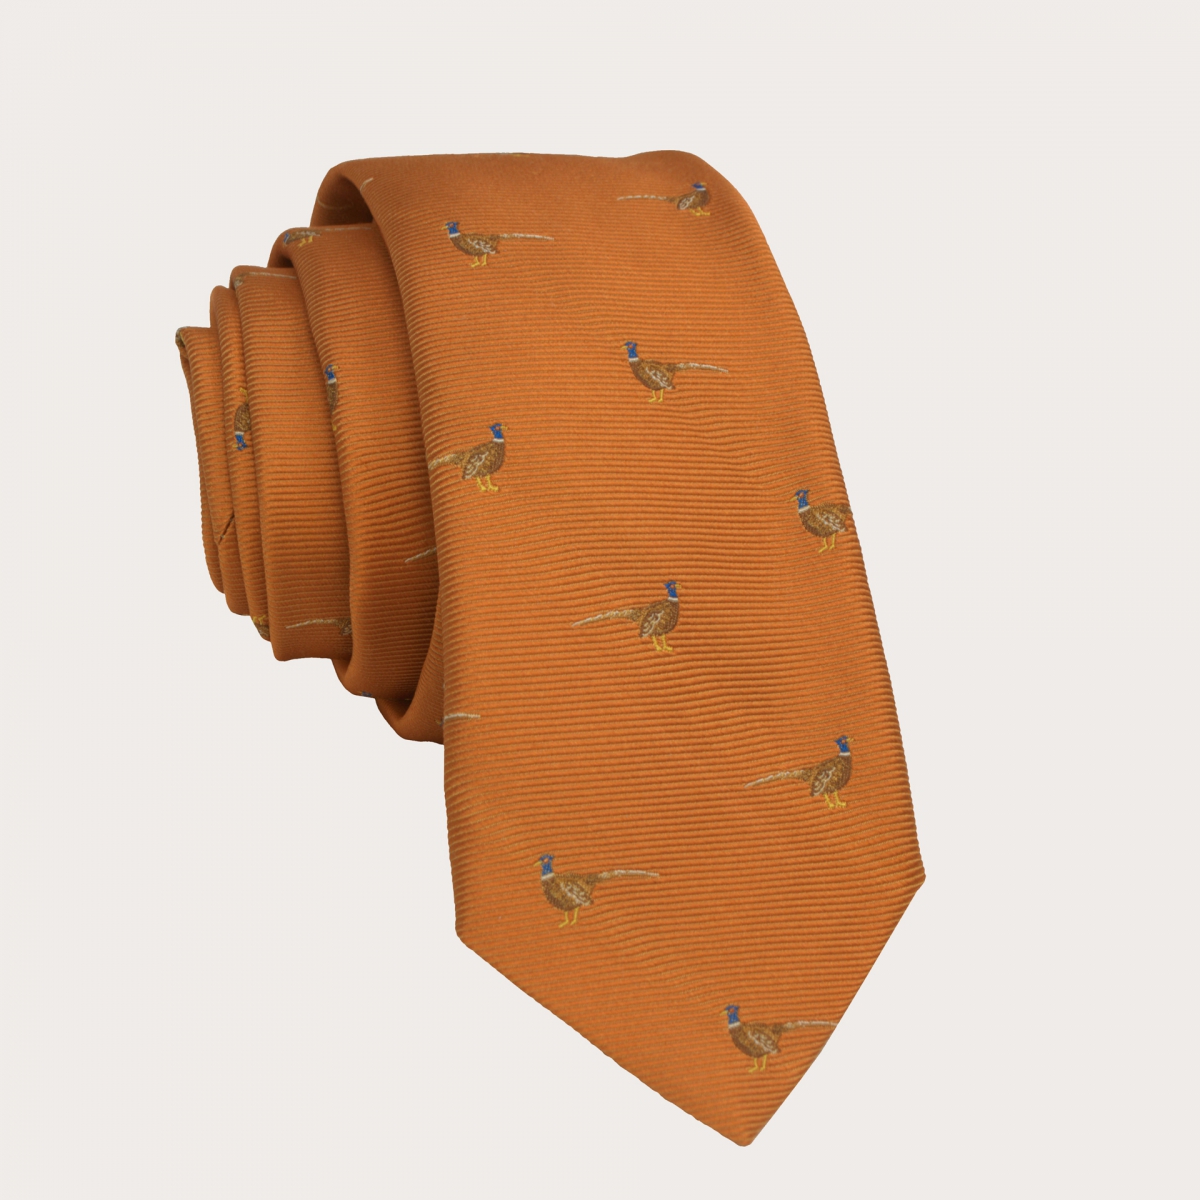 Brucle cravatta arancione in seta jacquard ricamata con fagiani